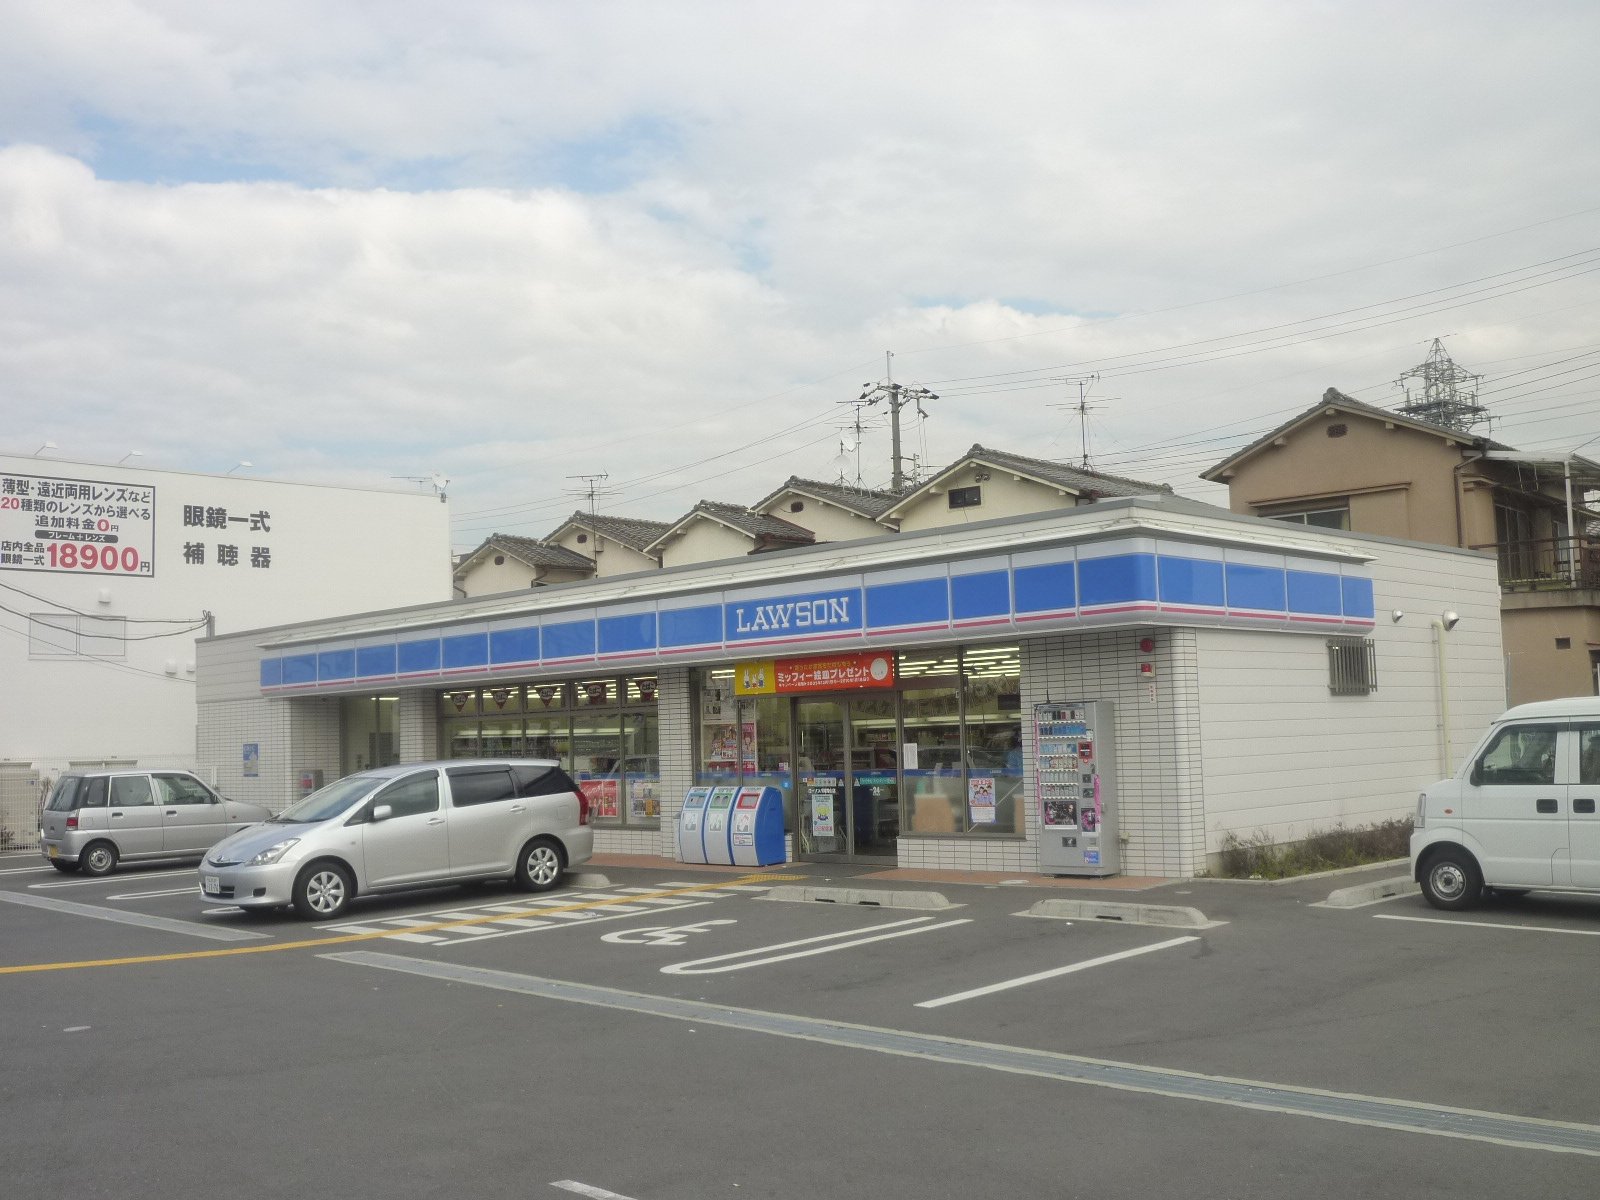 Convenience store. 173m until Lawson Yao Aoyama (convenience store)